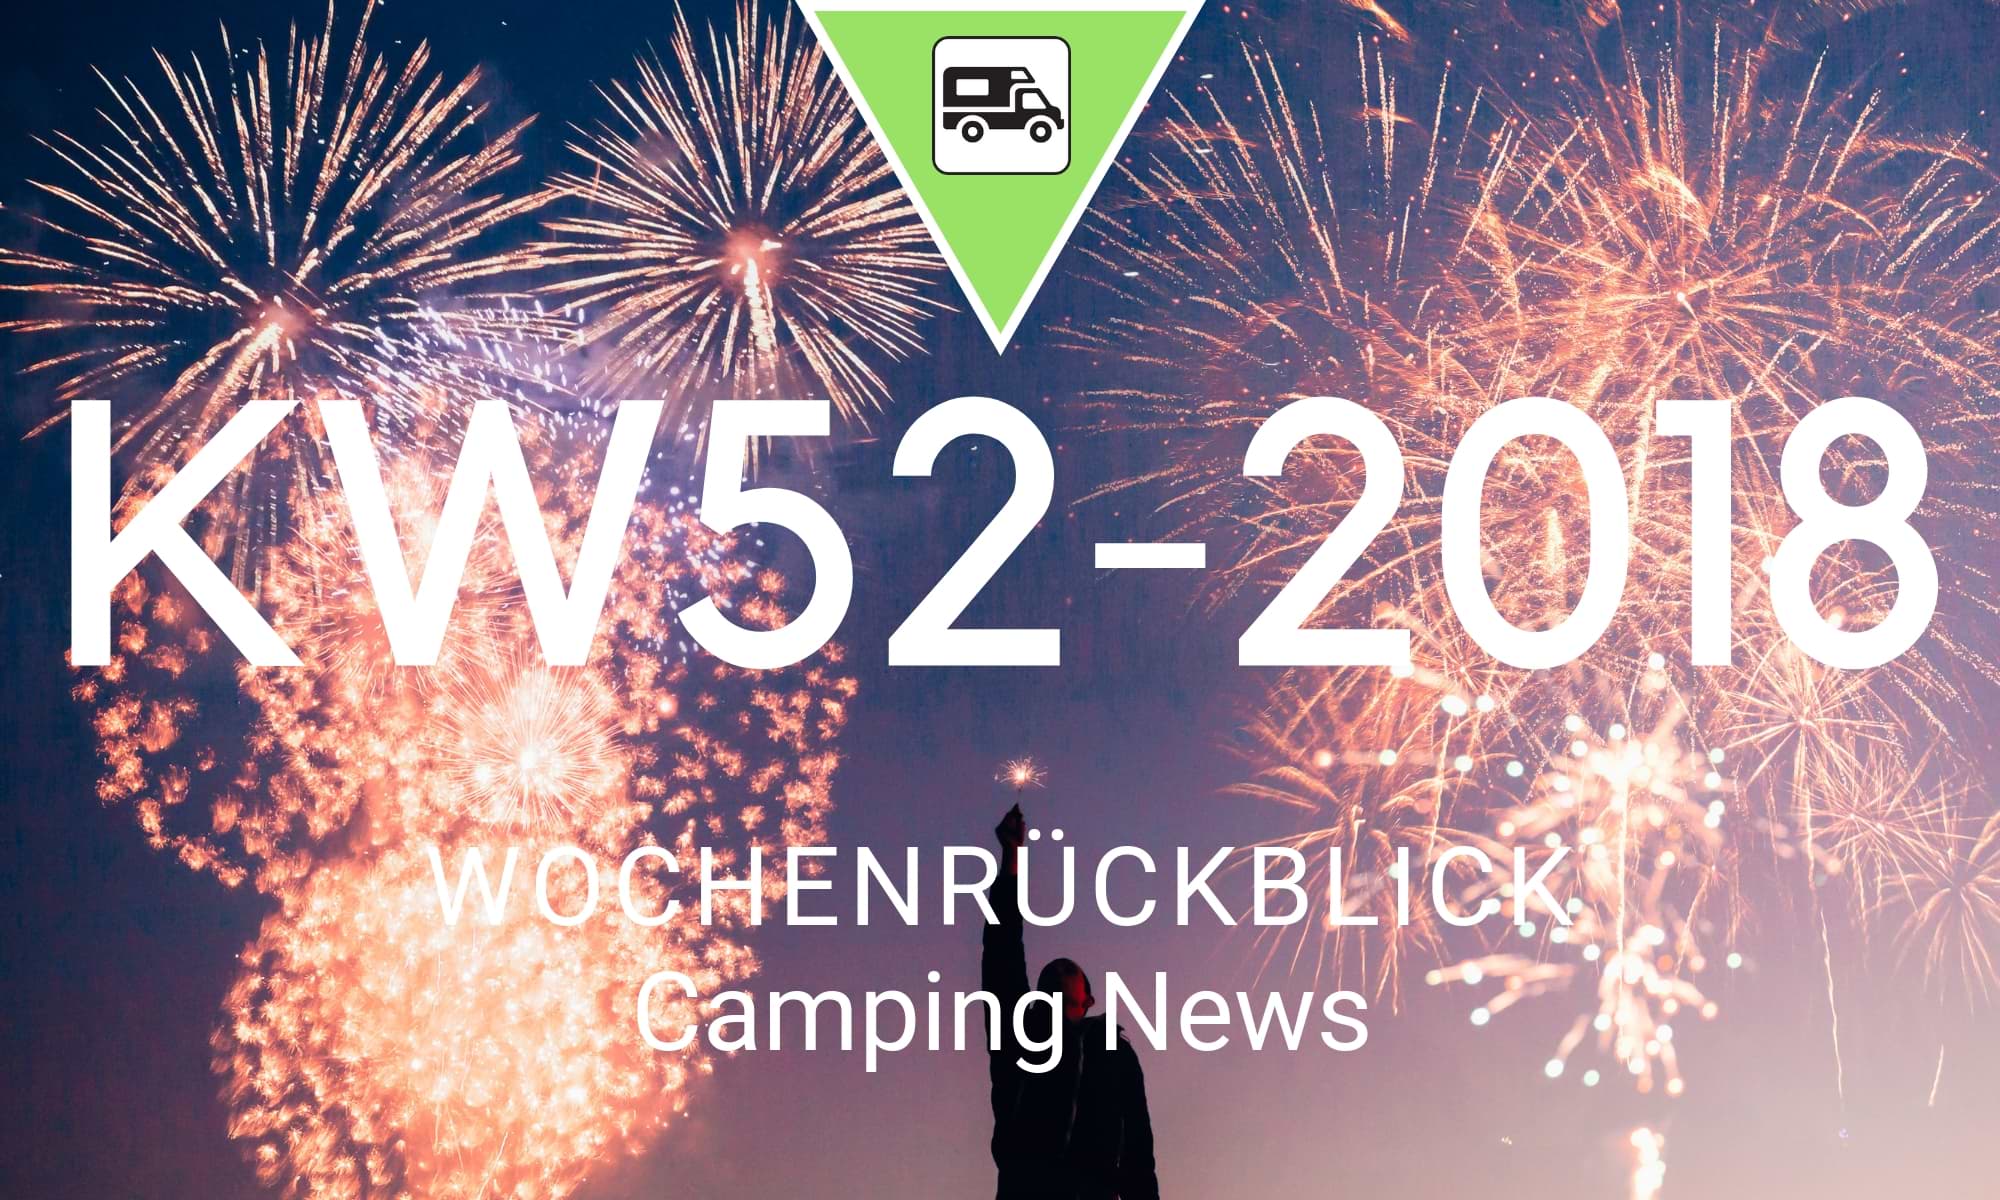 Wochenrückblick Camping News KW52-2018